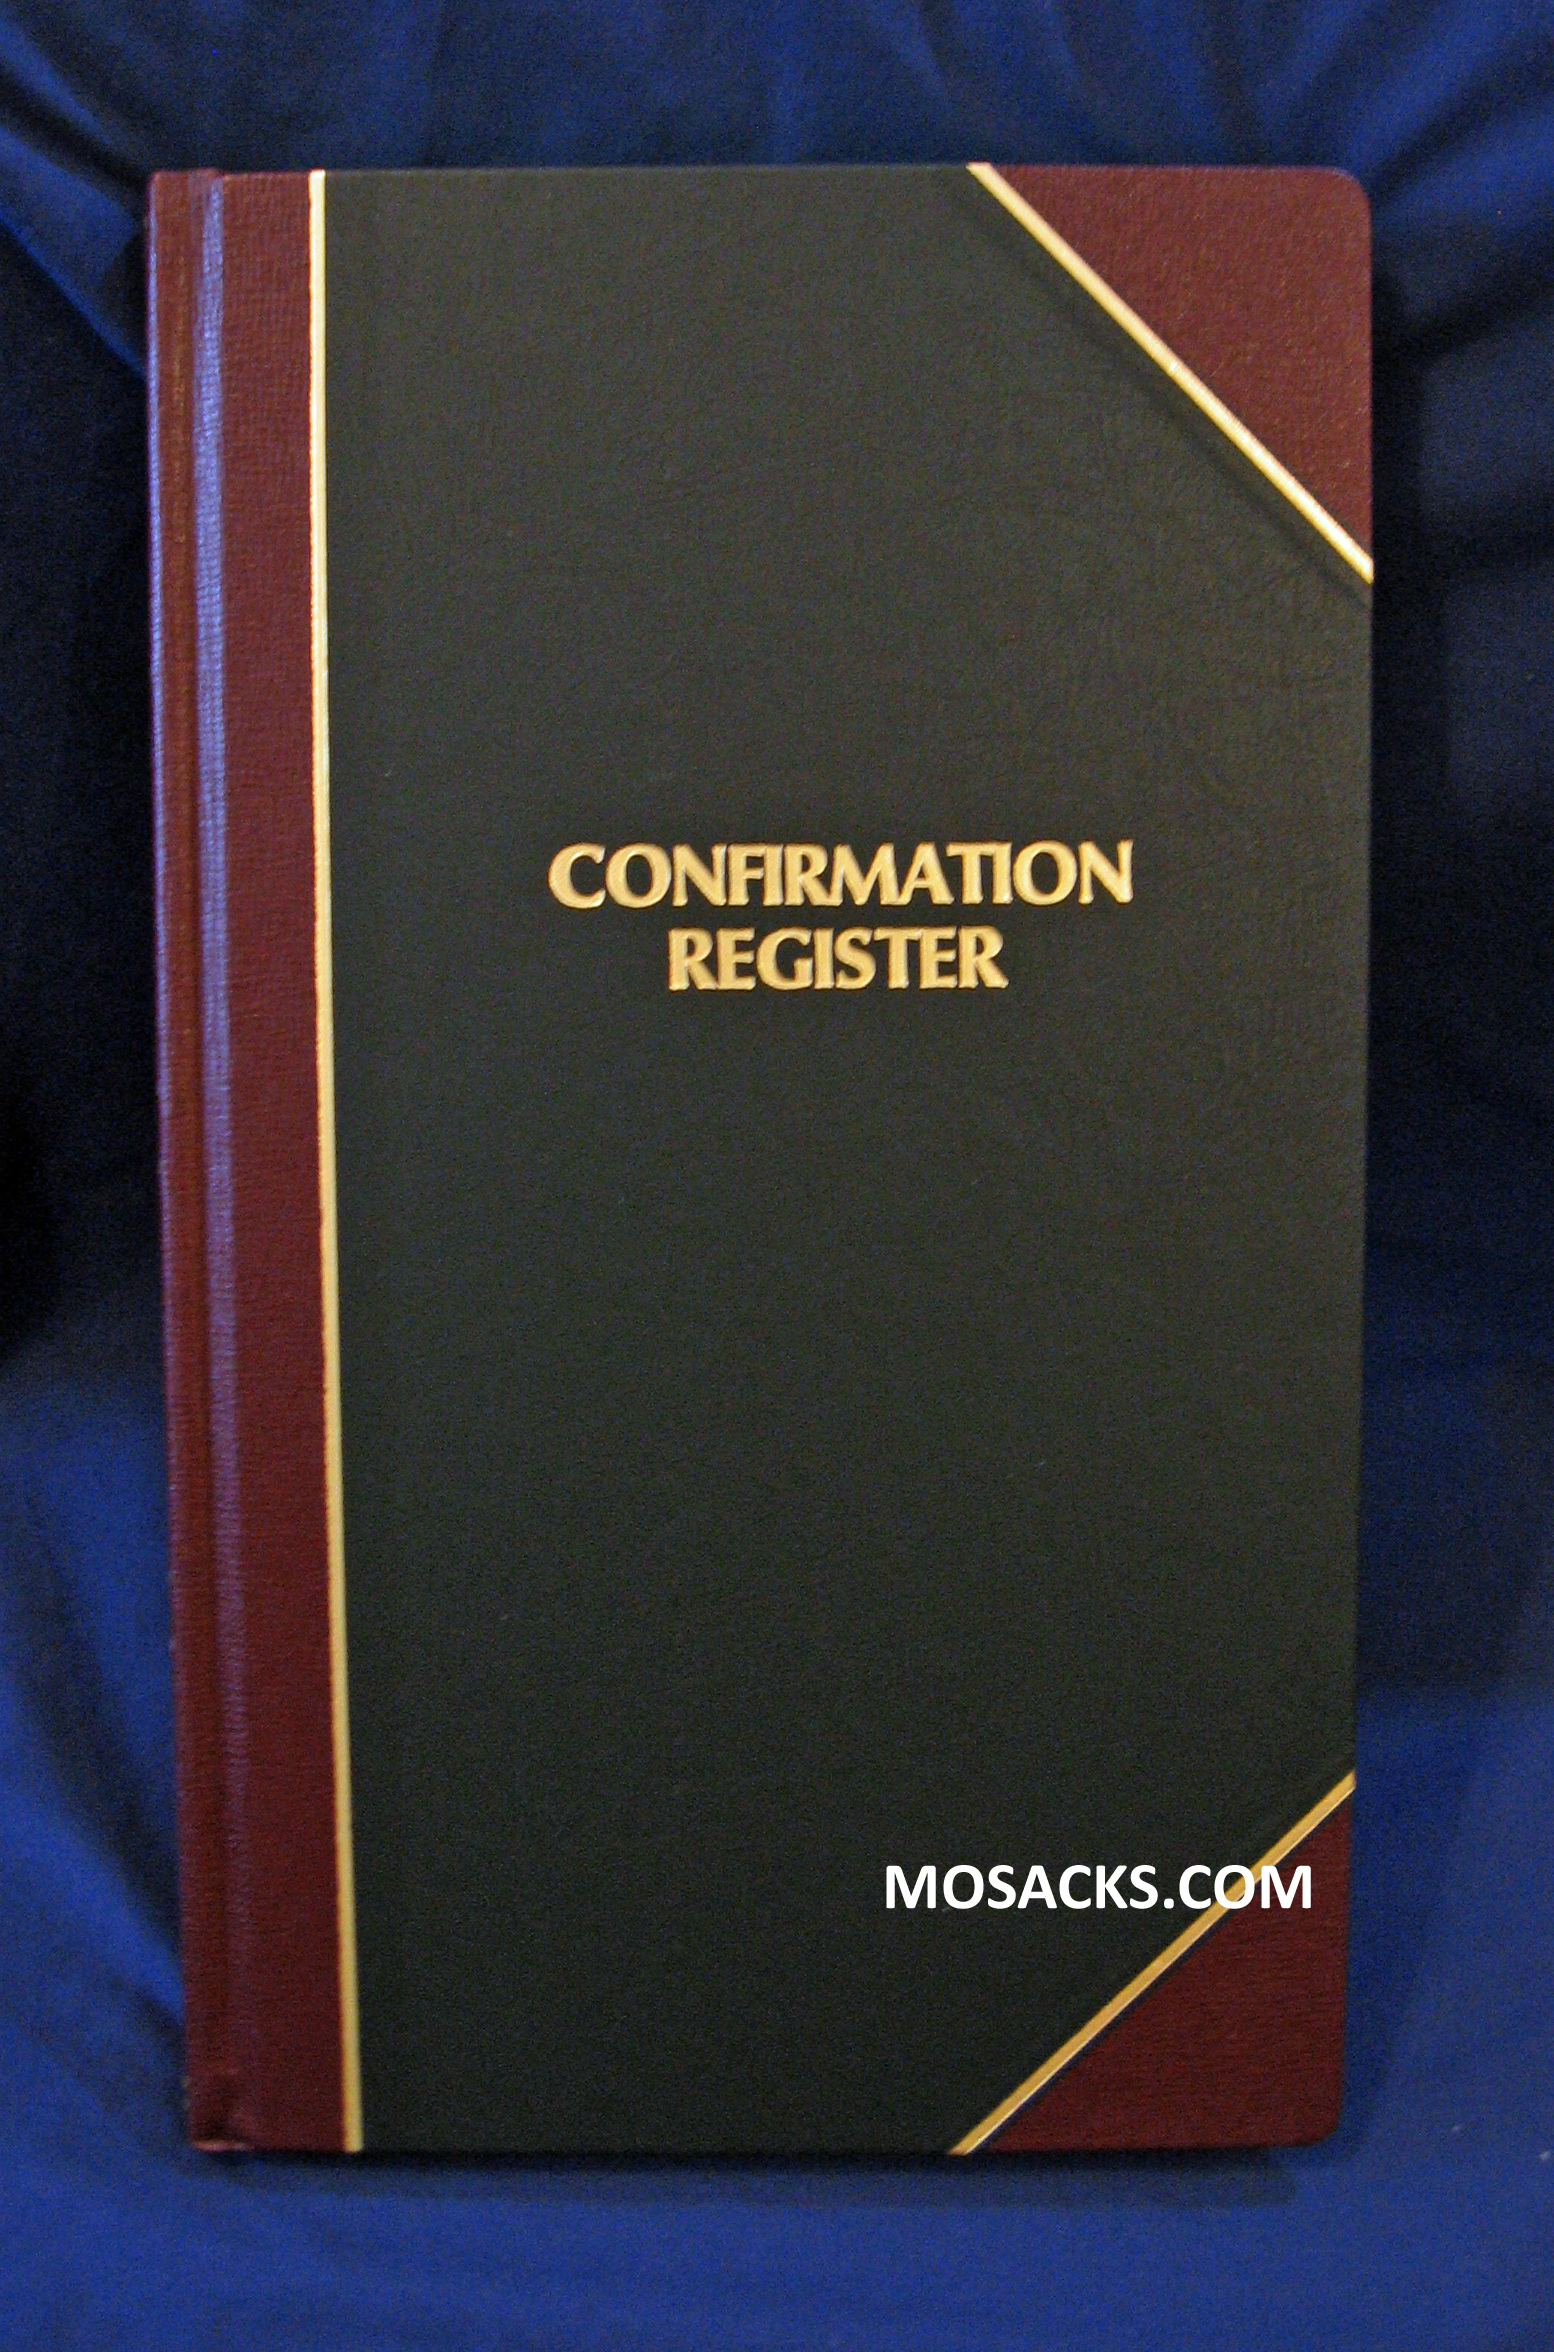 Standard Confirmation Register No. 173